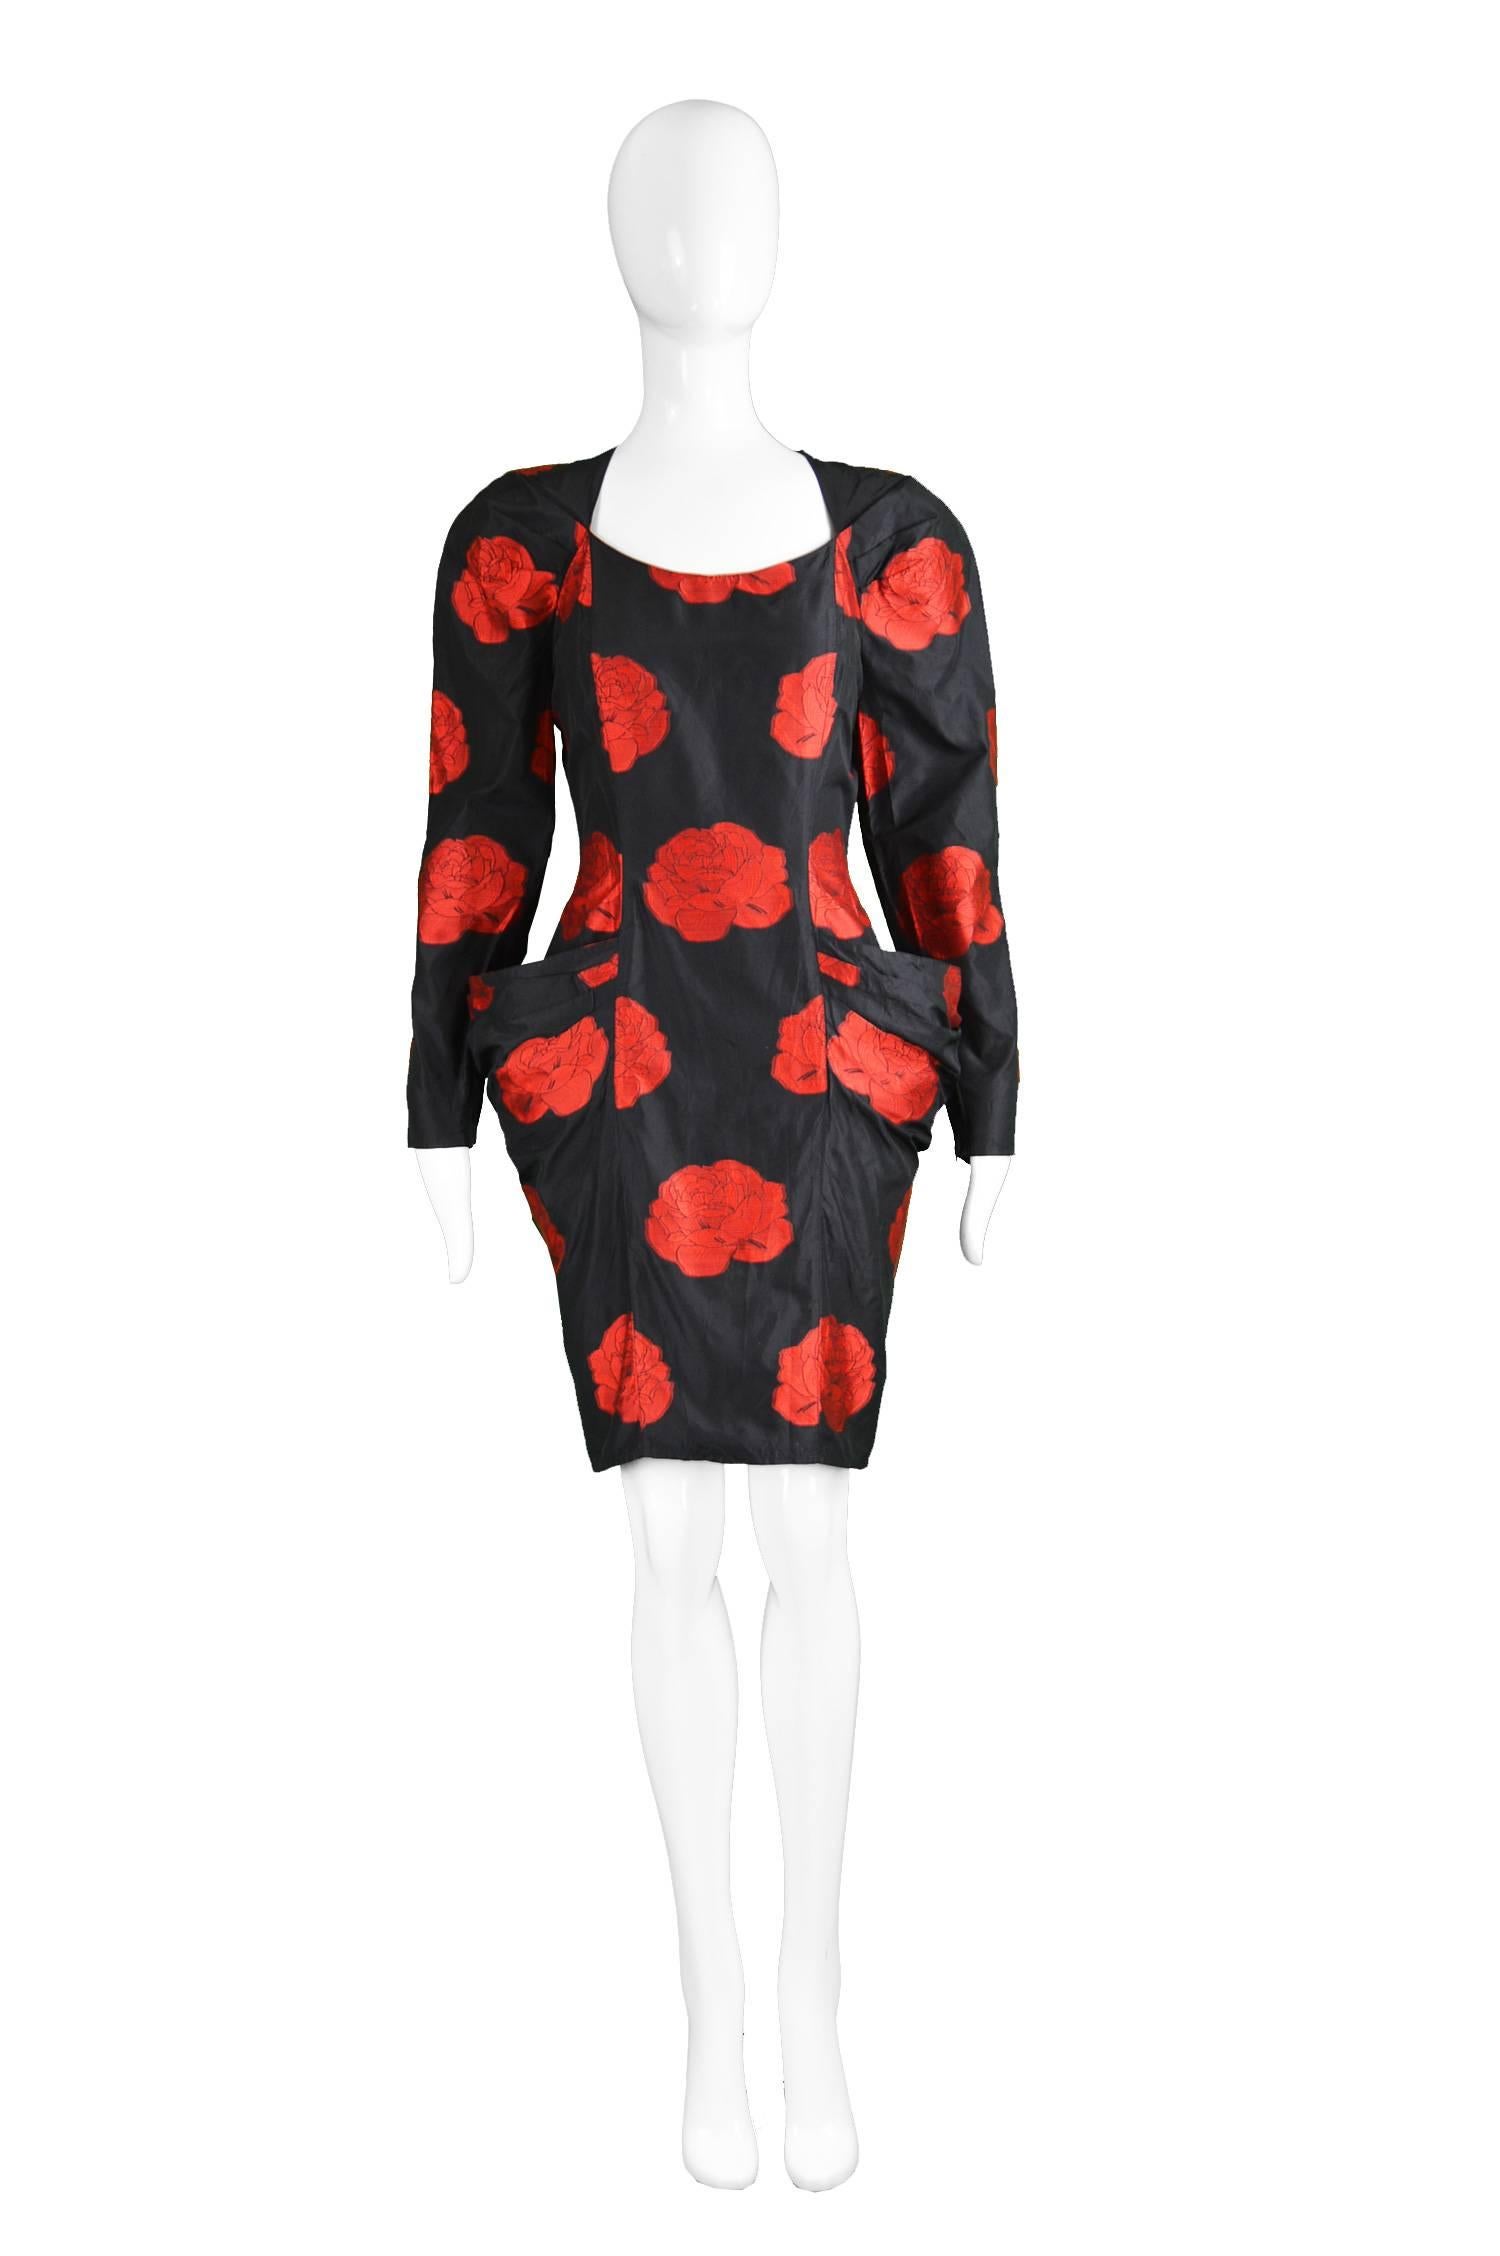 Roccobarocco Black & Red Silk Cocktail Dress with Statement Pockets, 1980s

Estimated Size: UK 8-10/ US 4-6/ EU 36-38. Please check measurements to ensure fit.
Bust - 34” / 86cm
Waist - 26” / 66cm
Hips - 36” / 91cm
Length (Shoulder to Hem) - 36” /